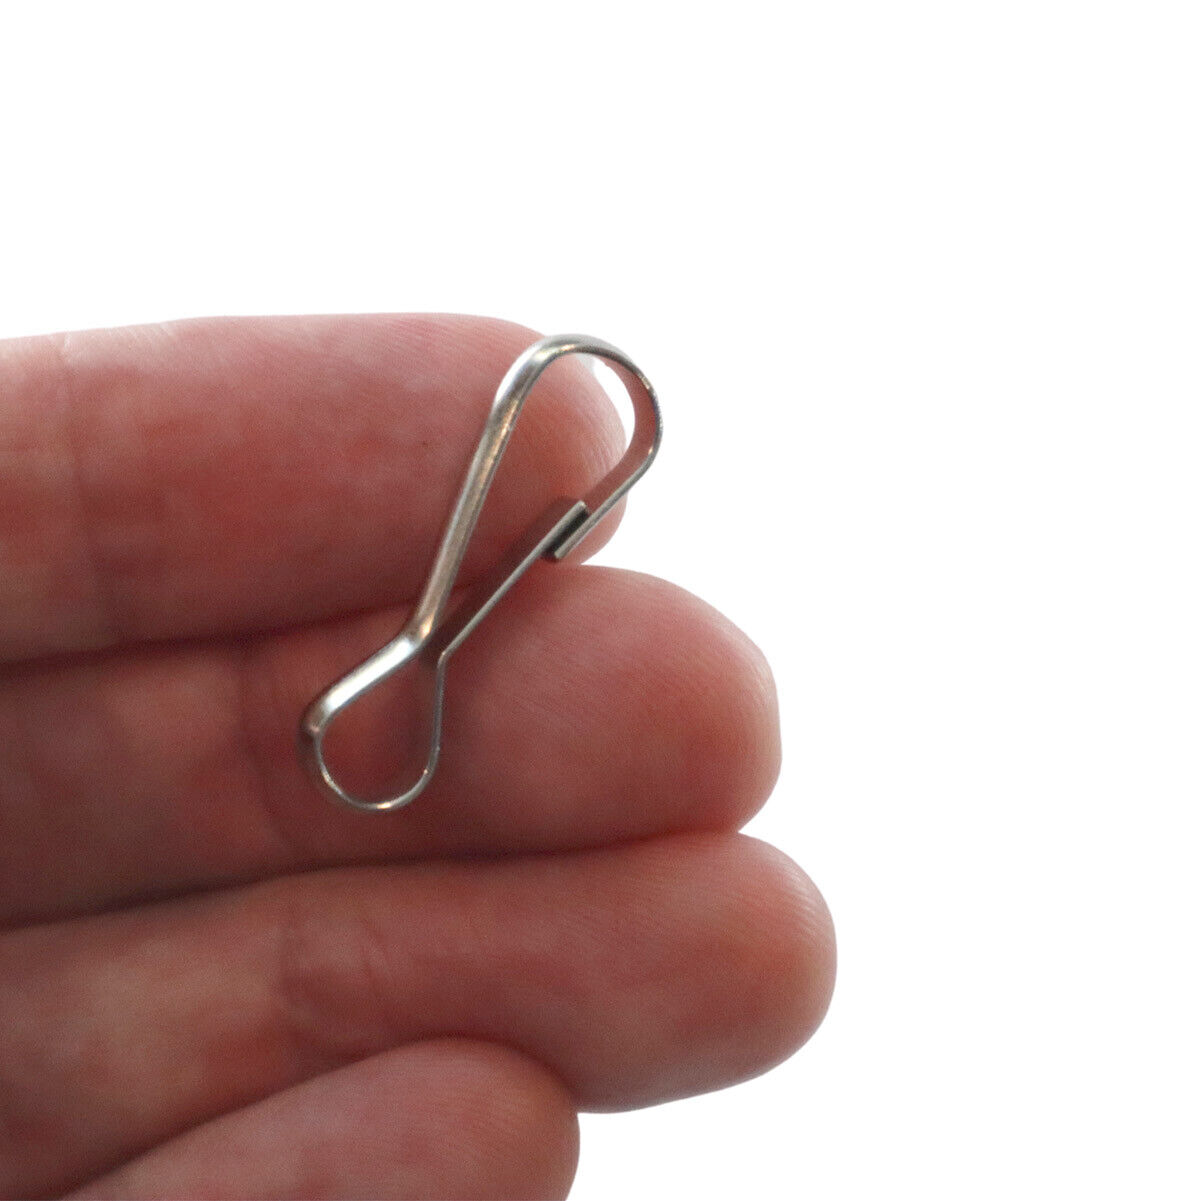 10 Small Metal J Hook Spring Clips for DIY Lanyards & Keychains - 1 1/4 Inch Specialist ID 7743-1020 - фотография #2